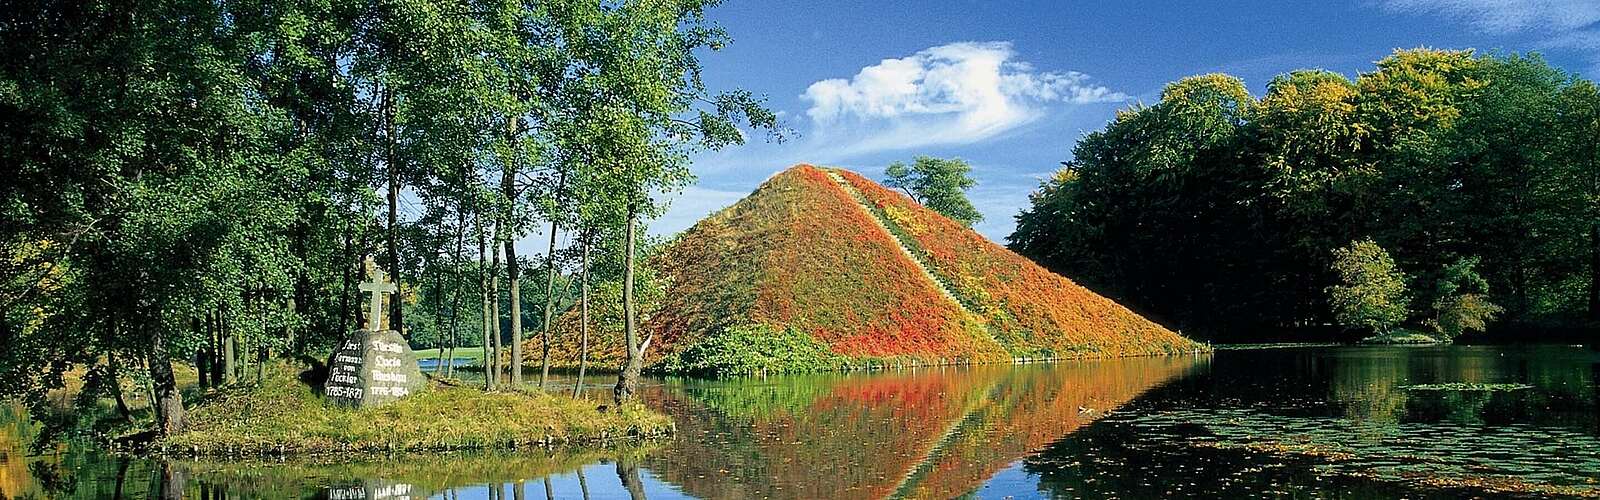 Seepyramide im Fürst-Pückler-Park Branitz,
        
    

        
        
            Foto: Boguslaw Switala